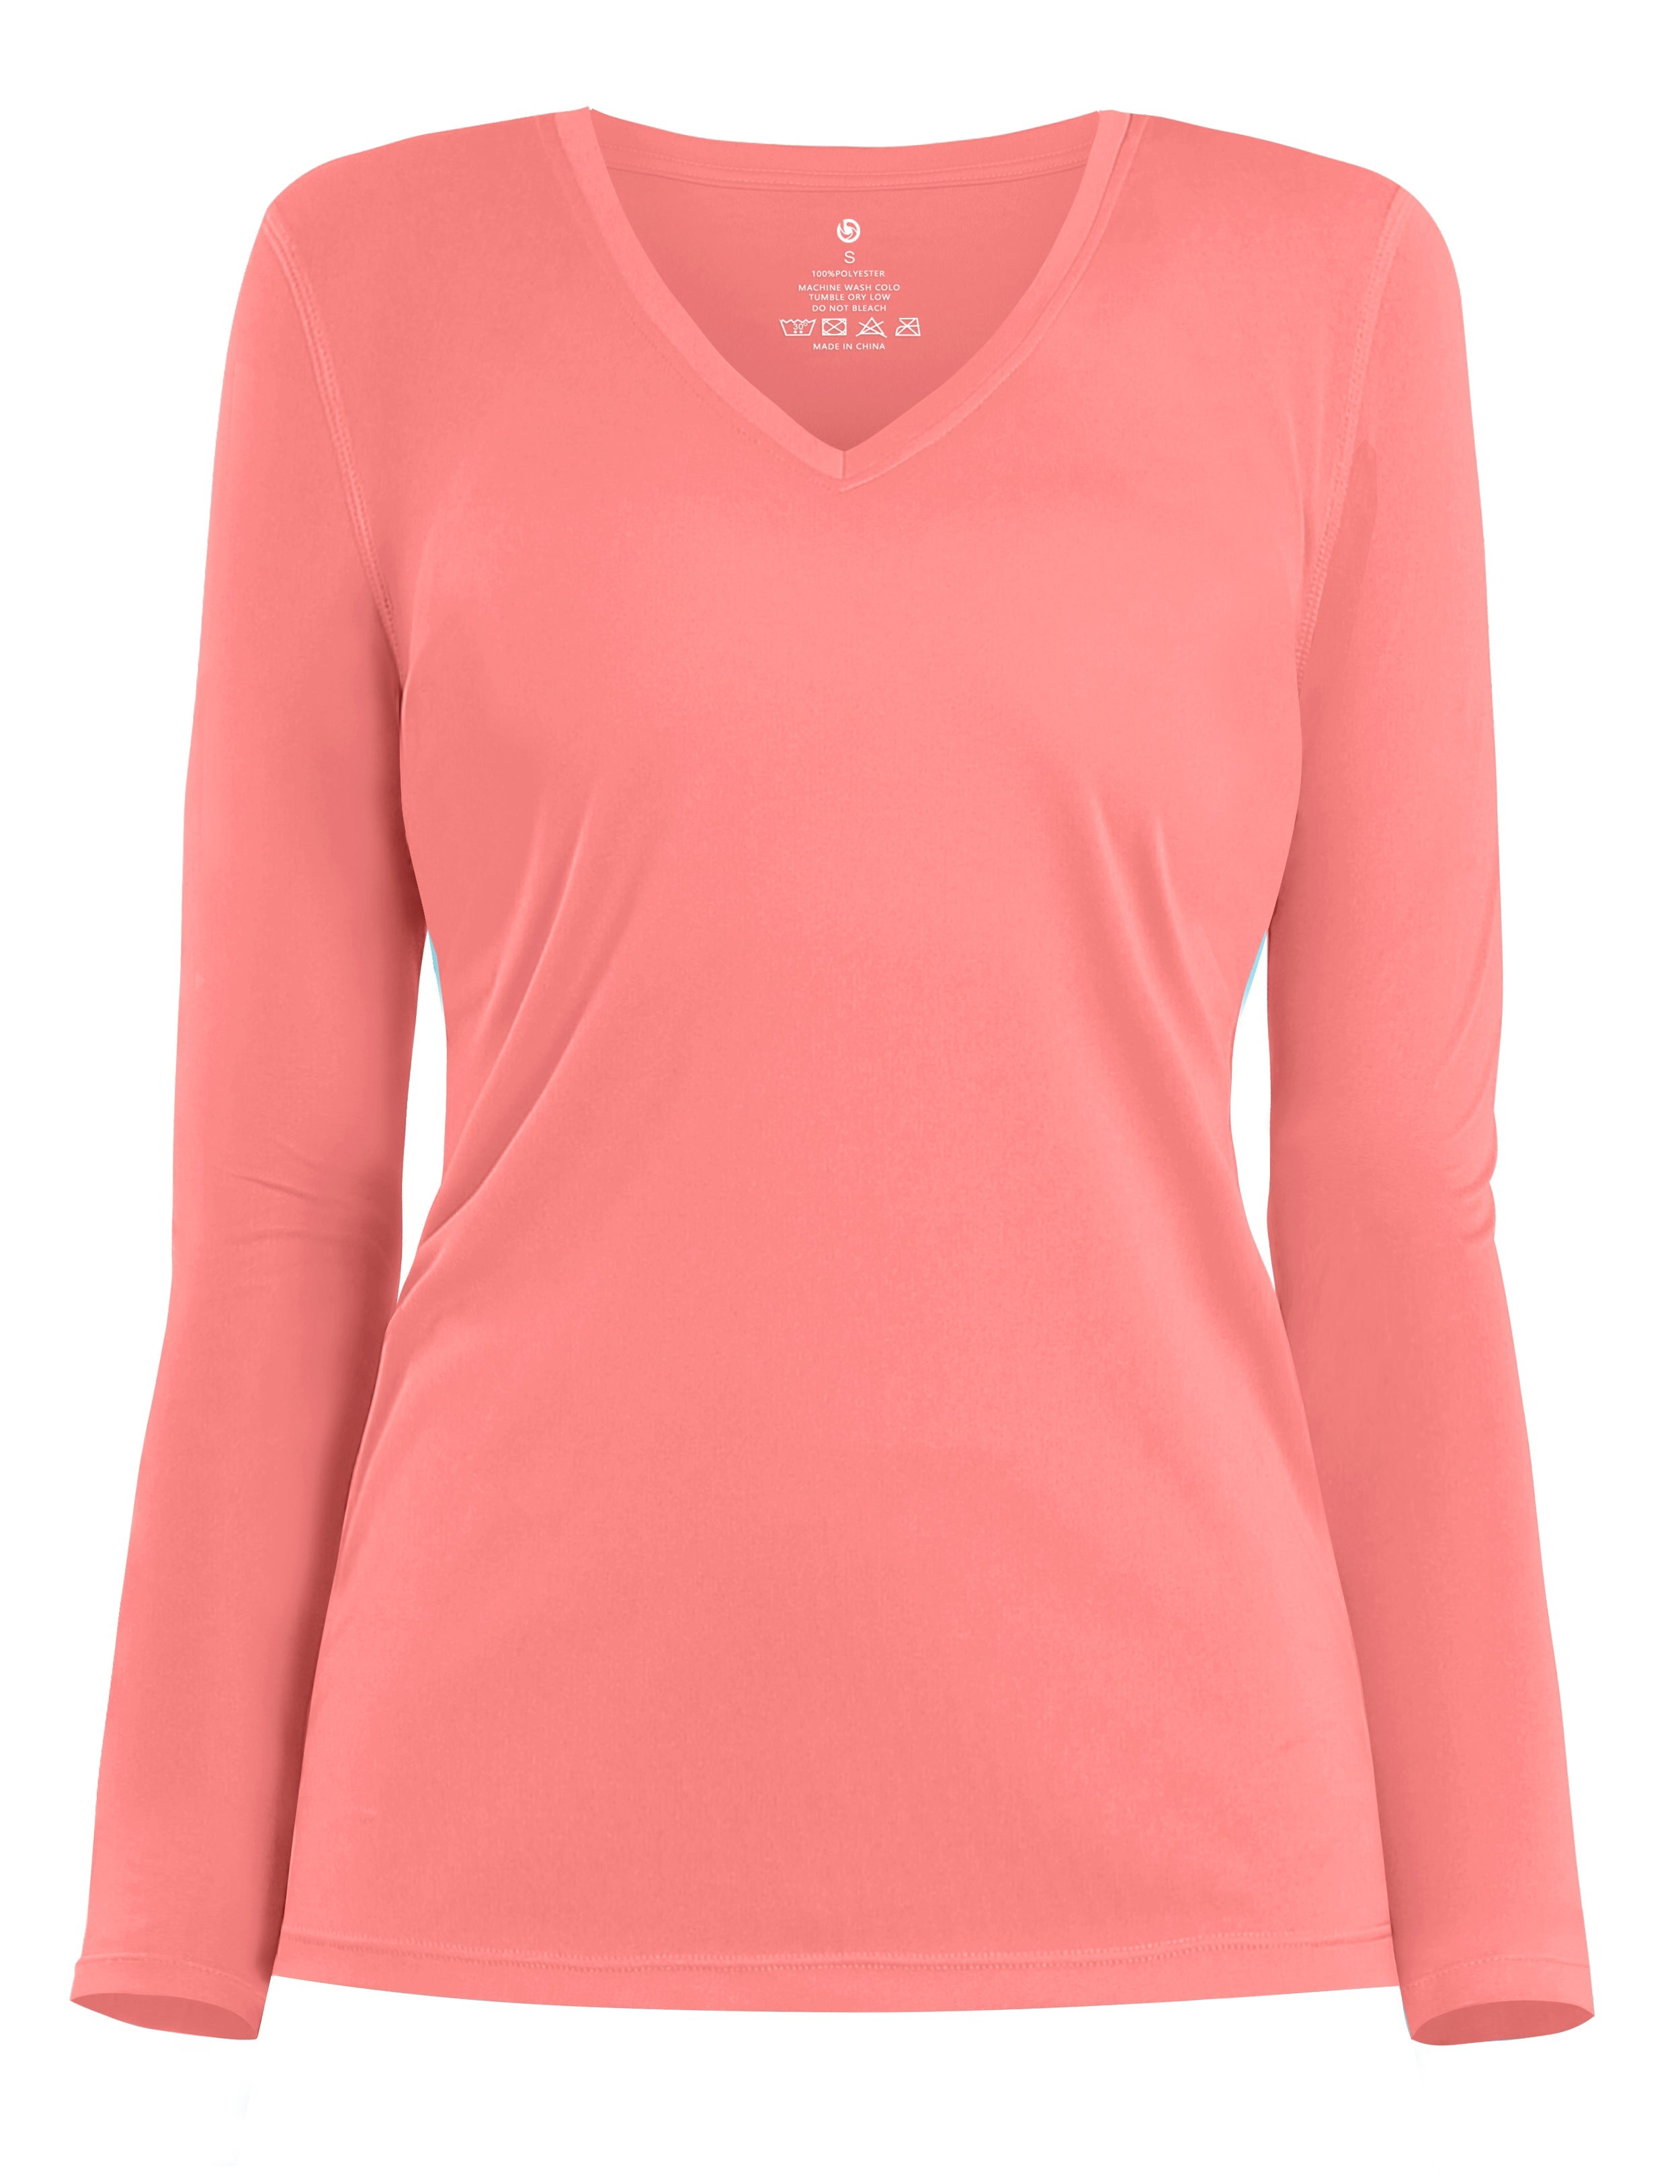 V Neck Long Sleeve Athletic Shirts coral_Golf